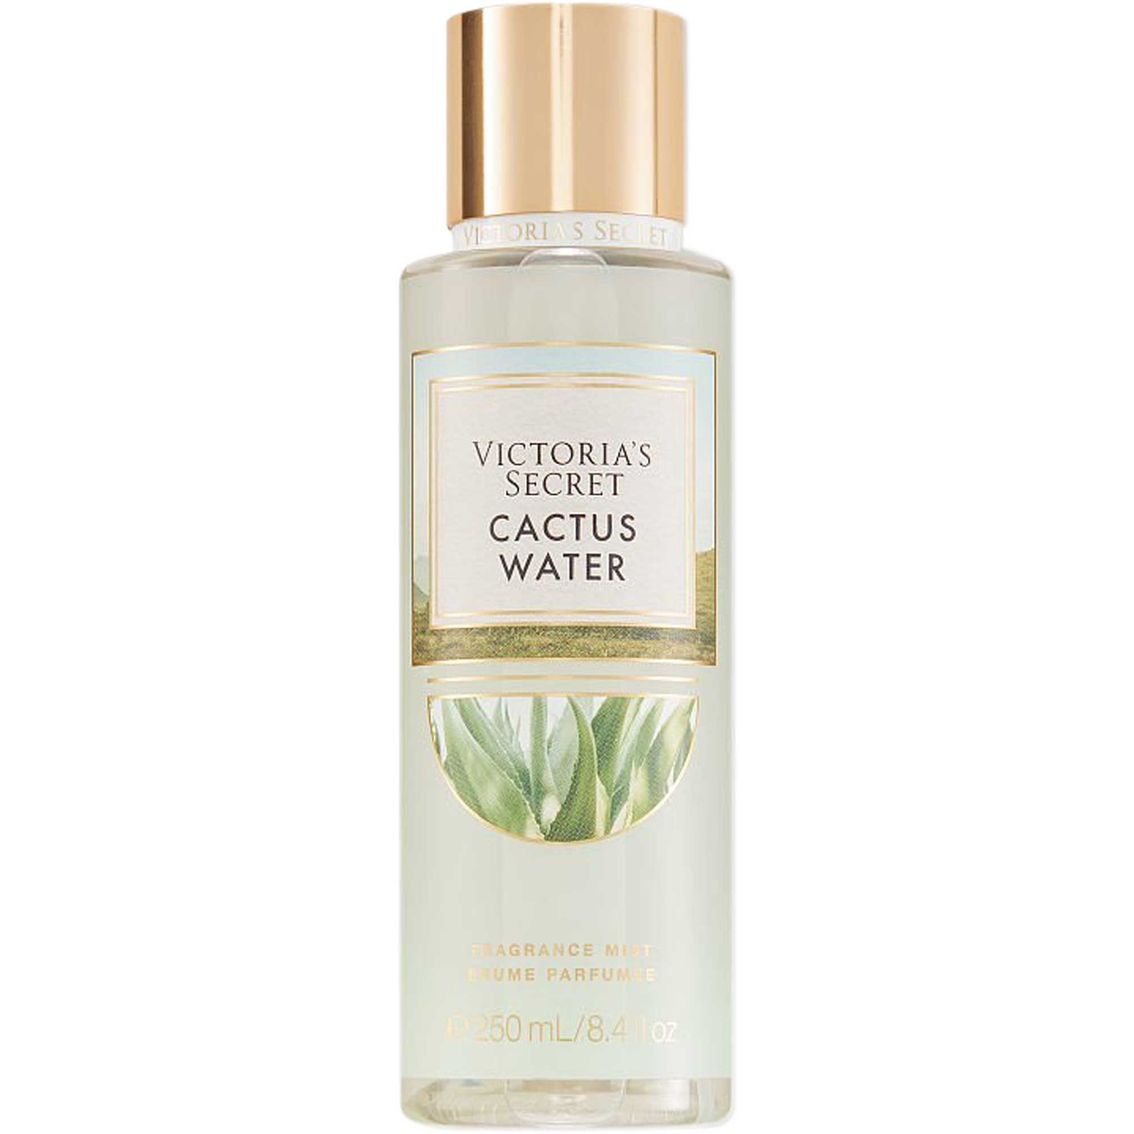 Victoria's Secret Cactus Water Fragrance Mist